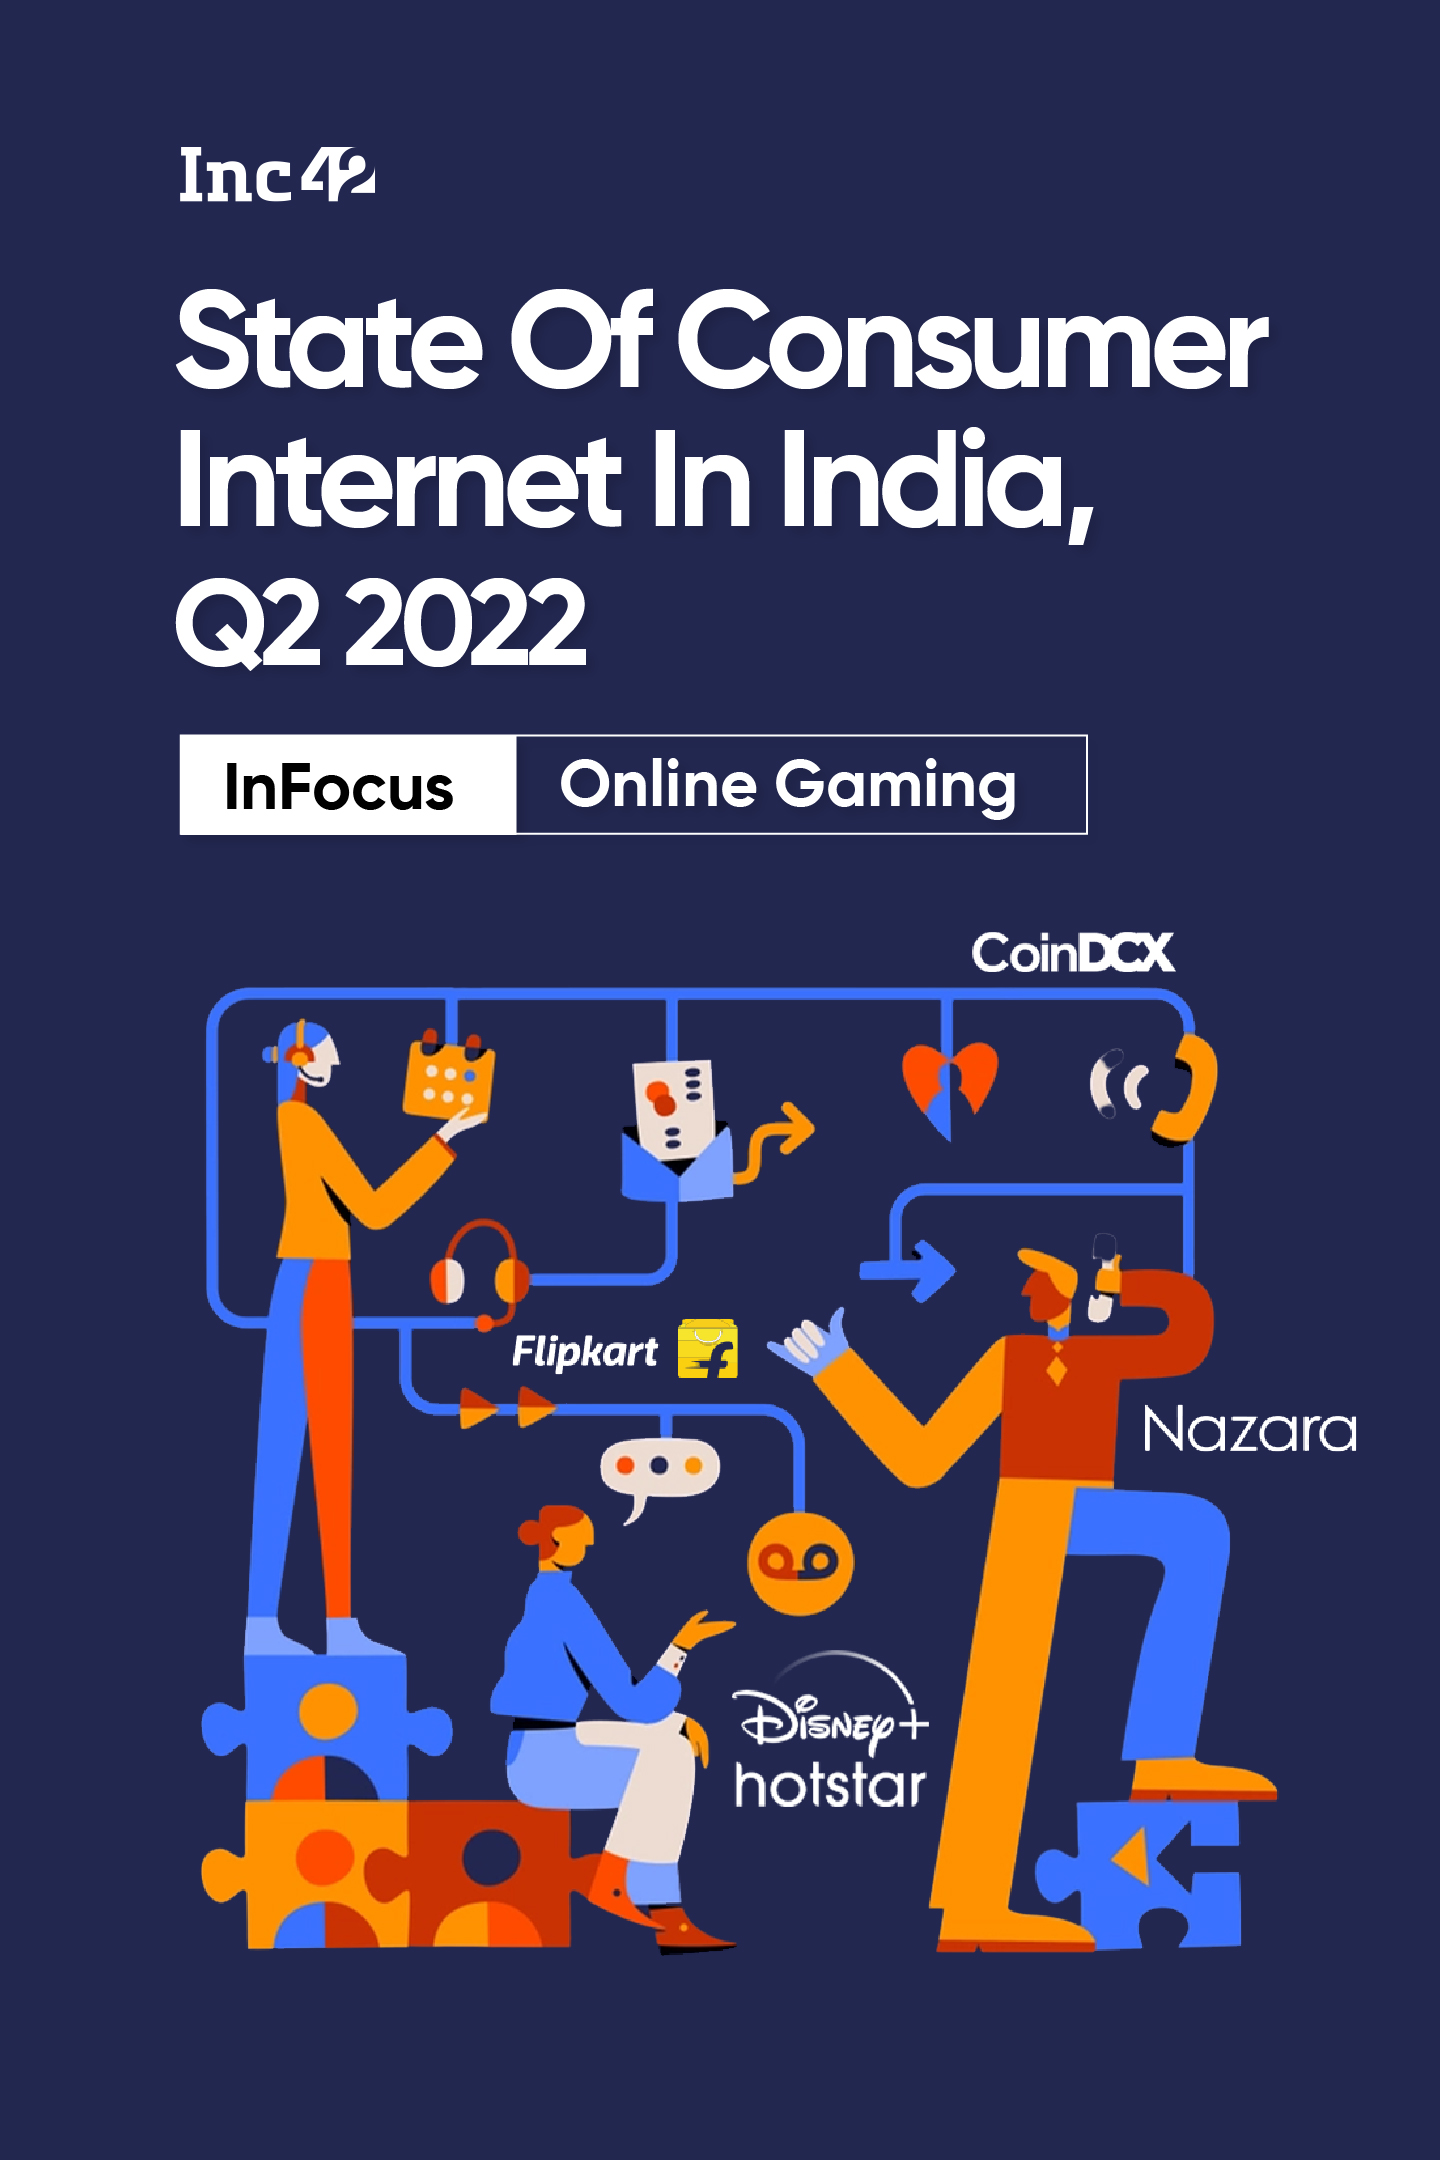 State Of Consumer Internet In India Report, Q2 2022